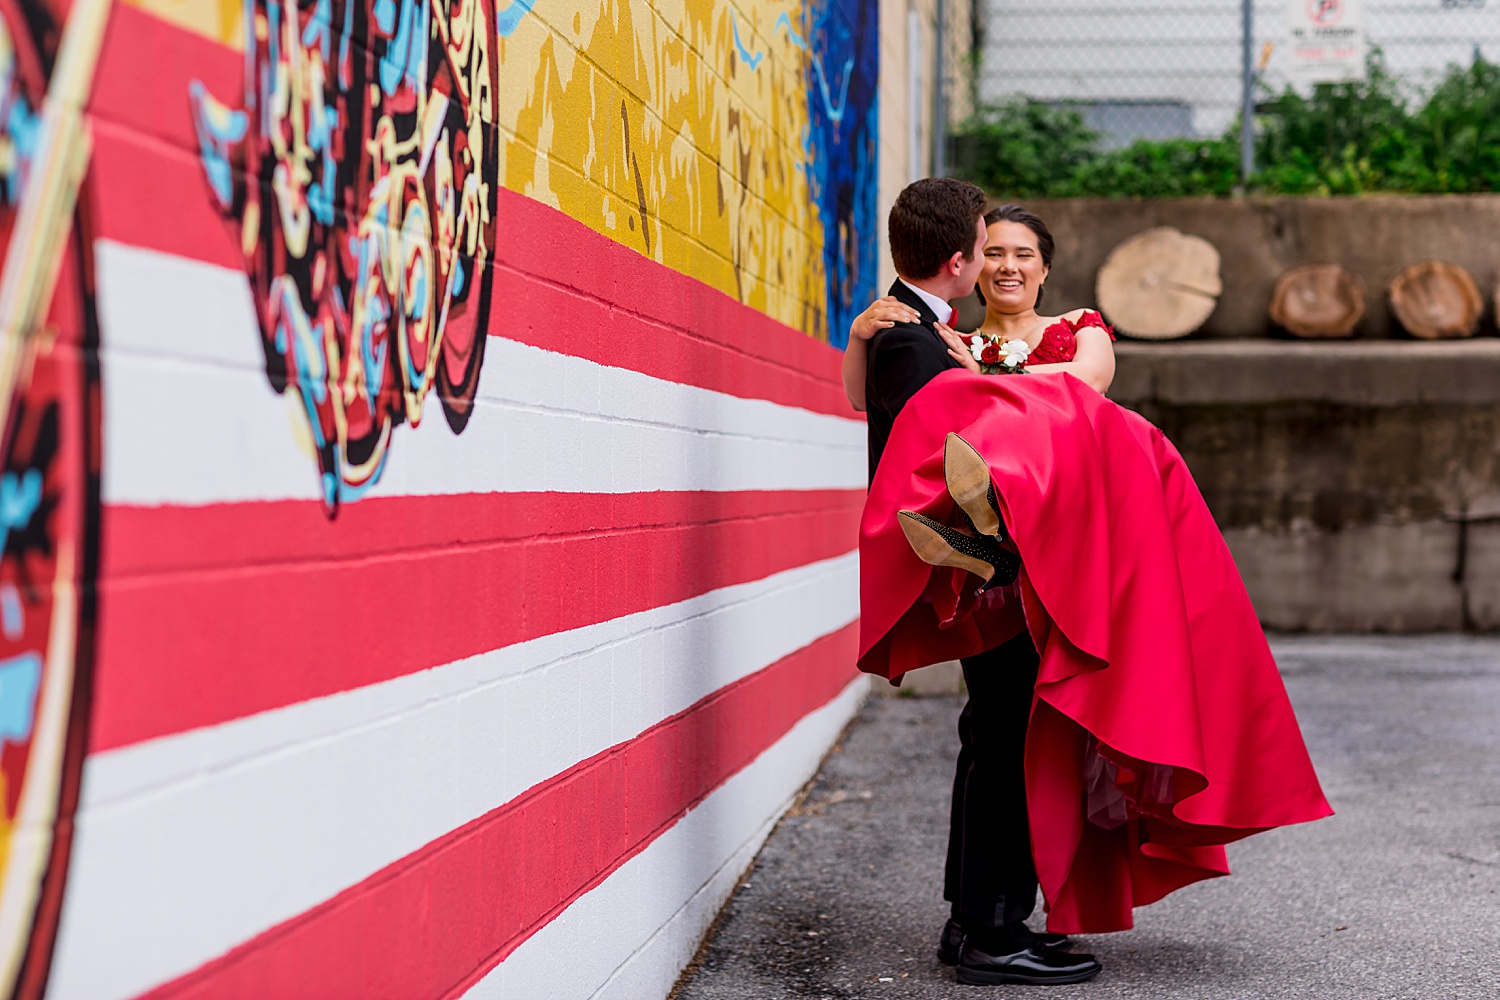 Wyomissing West Reading Pennsylvania high school prom Class of 2019 2020 senior portrait photographer murals